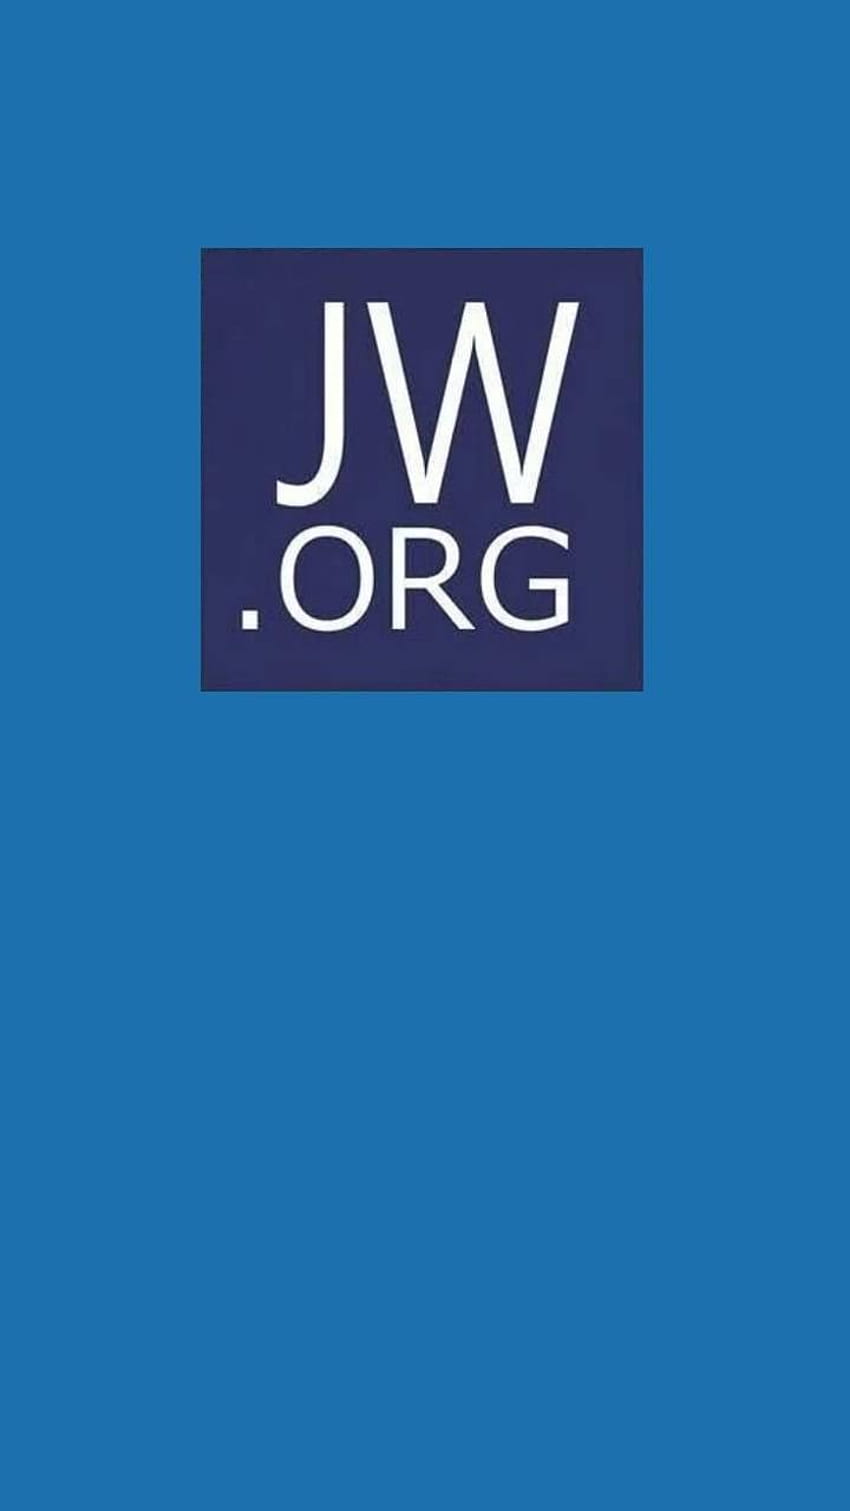 JW, JW.ORG HD 전화 배경 화면